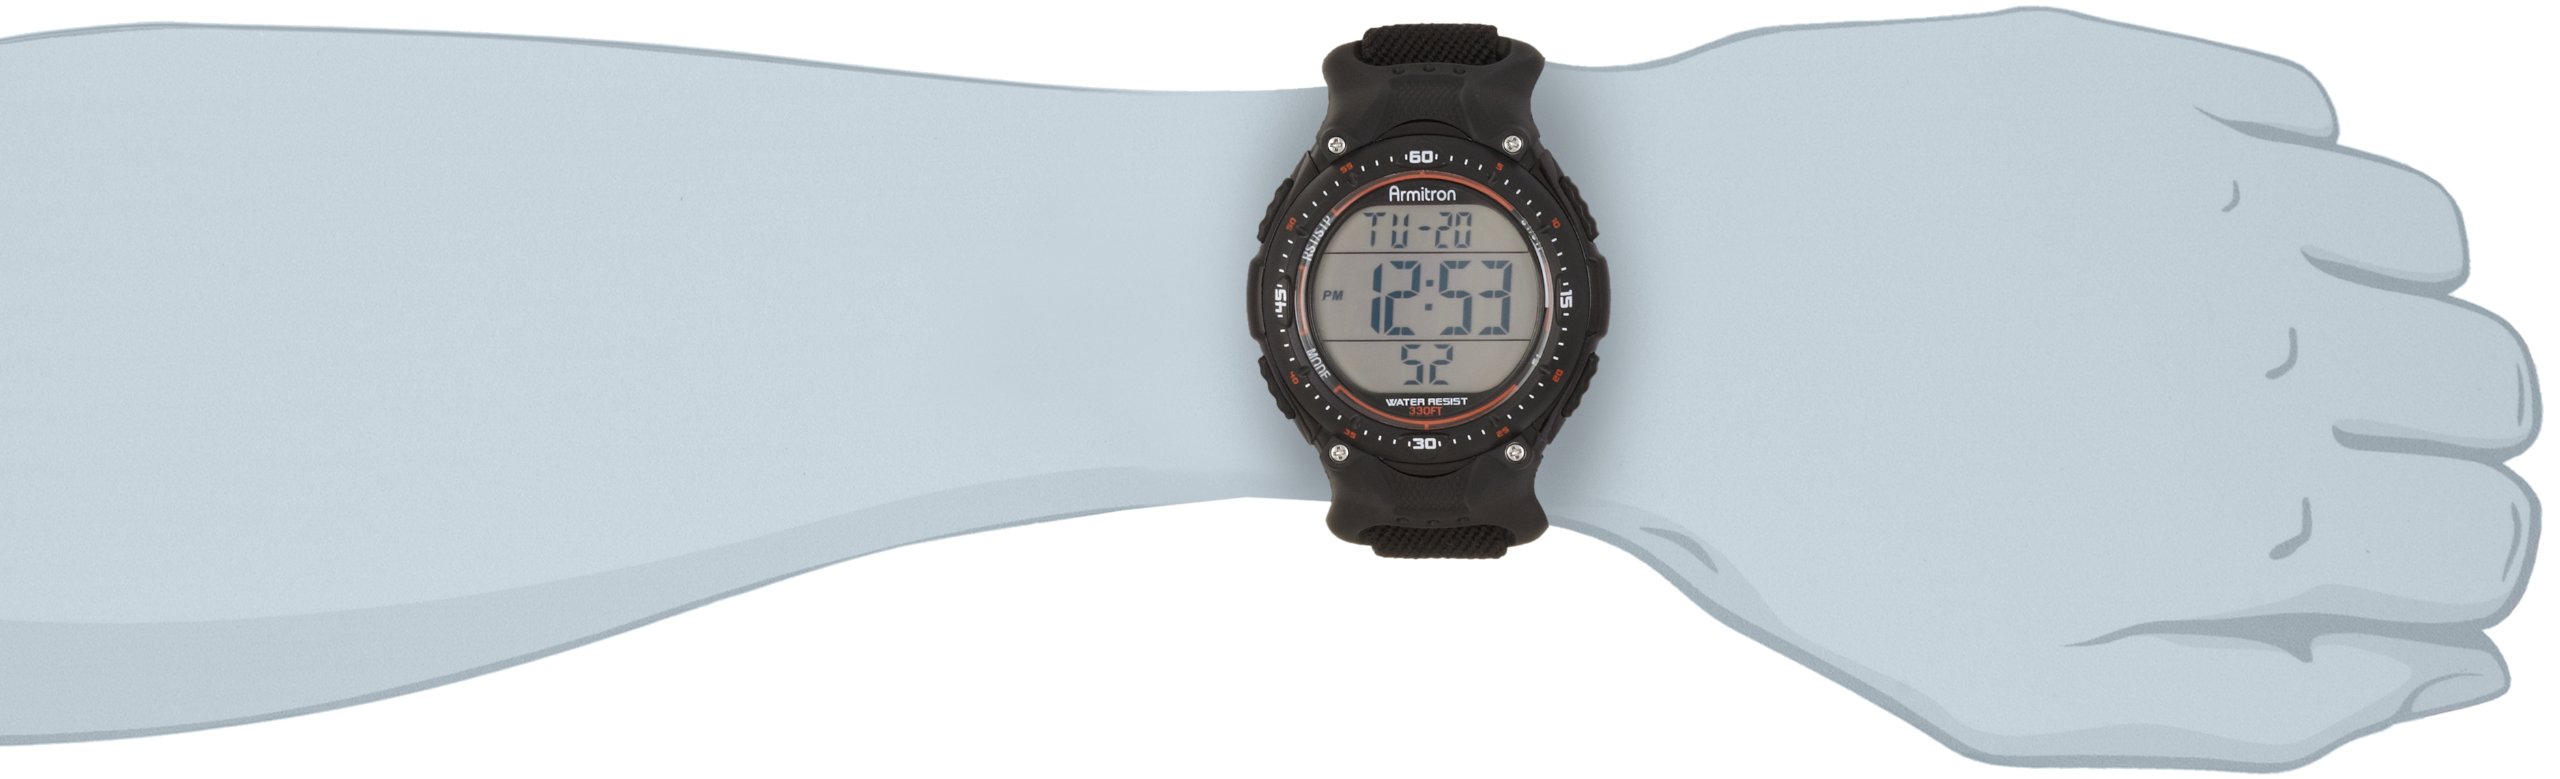 Armitron Sport Men's 408159BLK Chronograph Black Strap Digital Display Watch